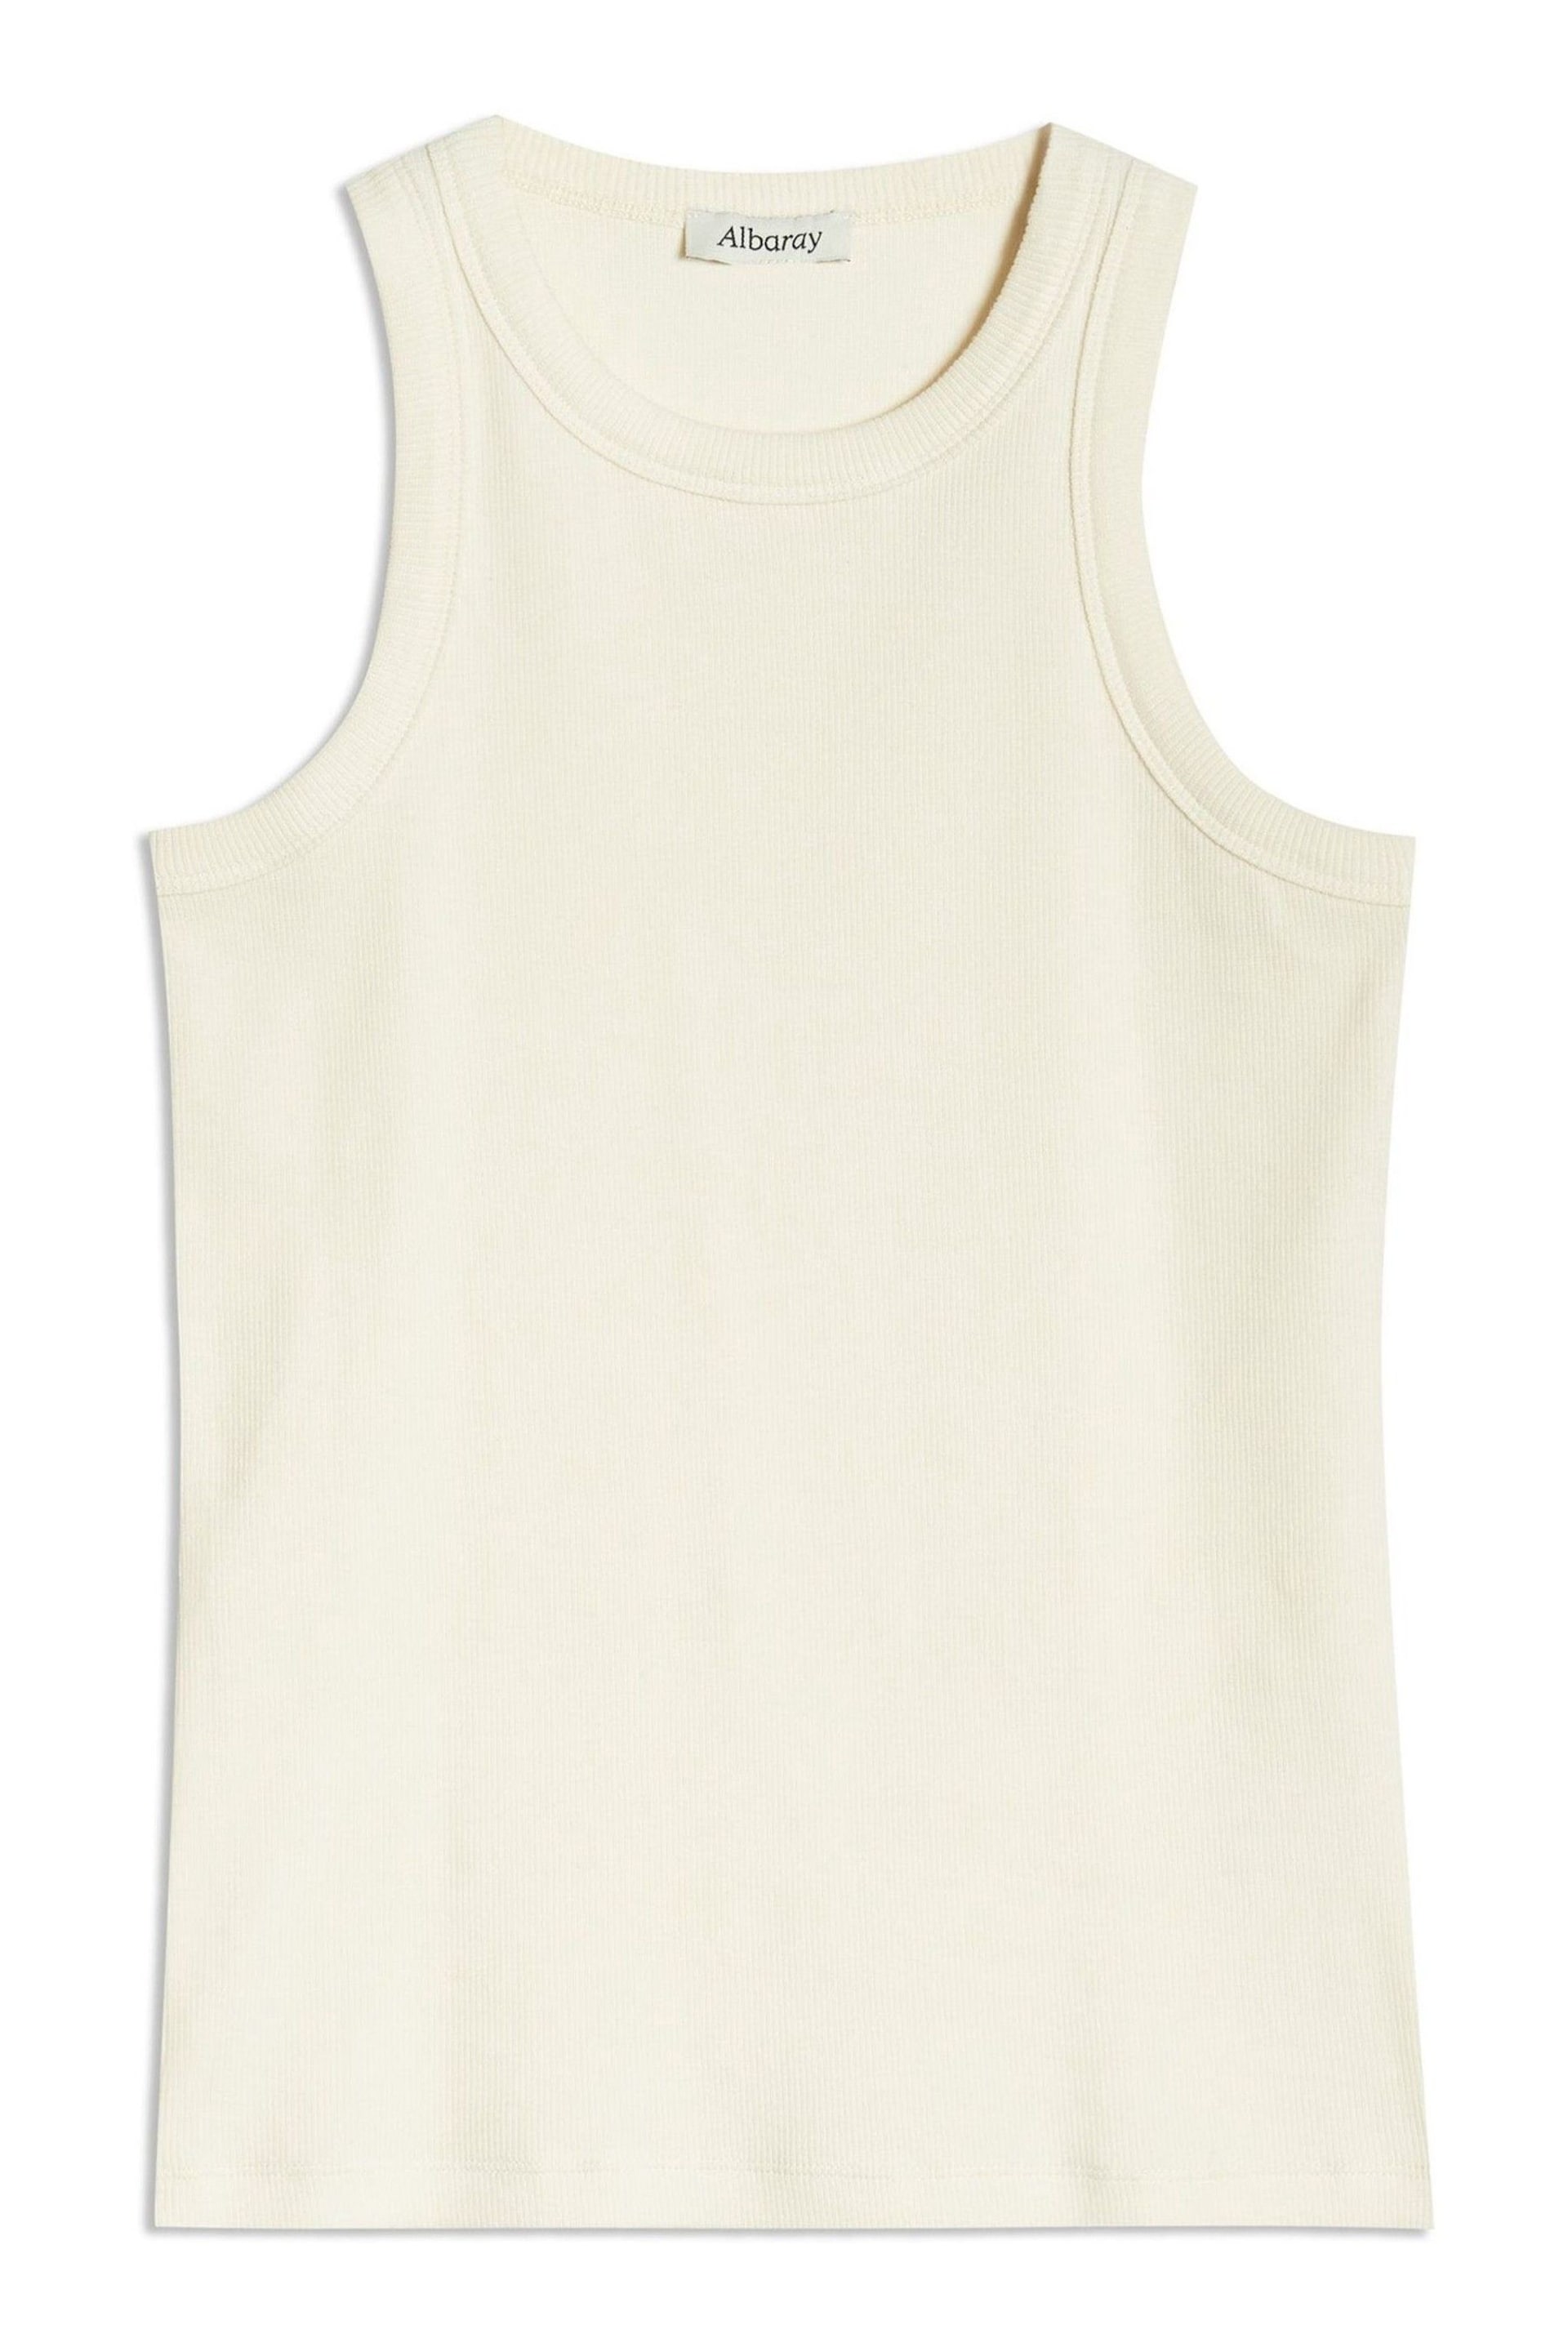 Albaray Cream High Neck Vest - Image 4 of 4